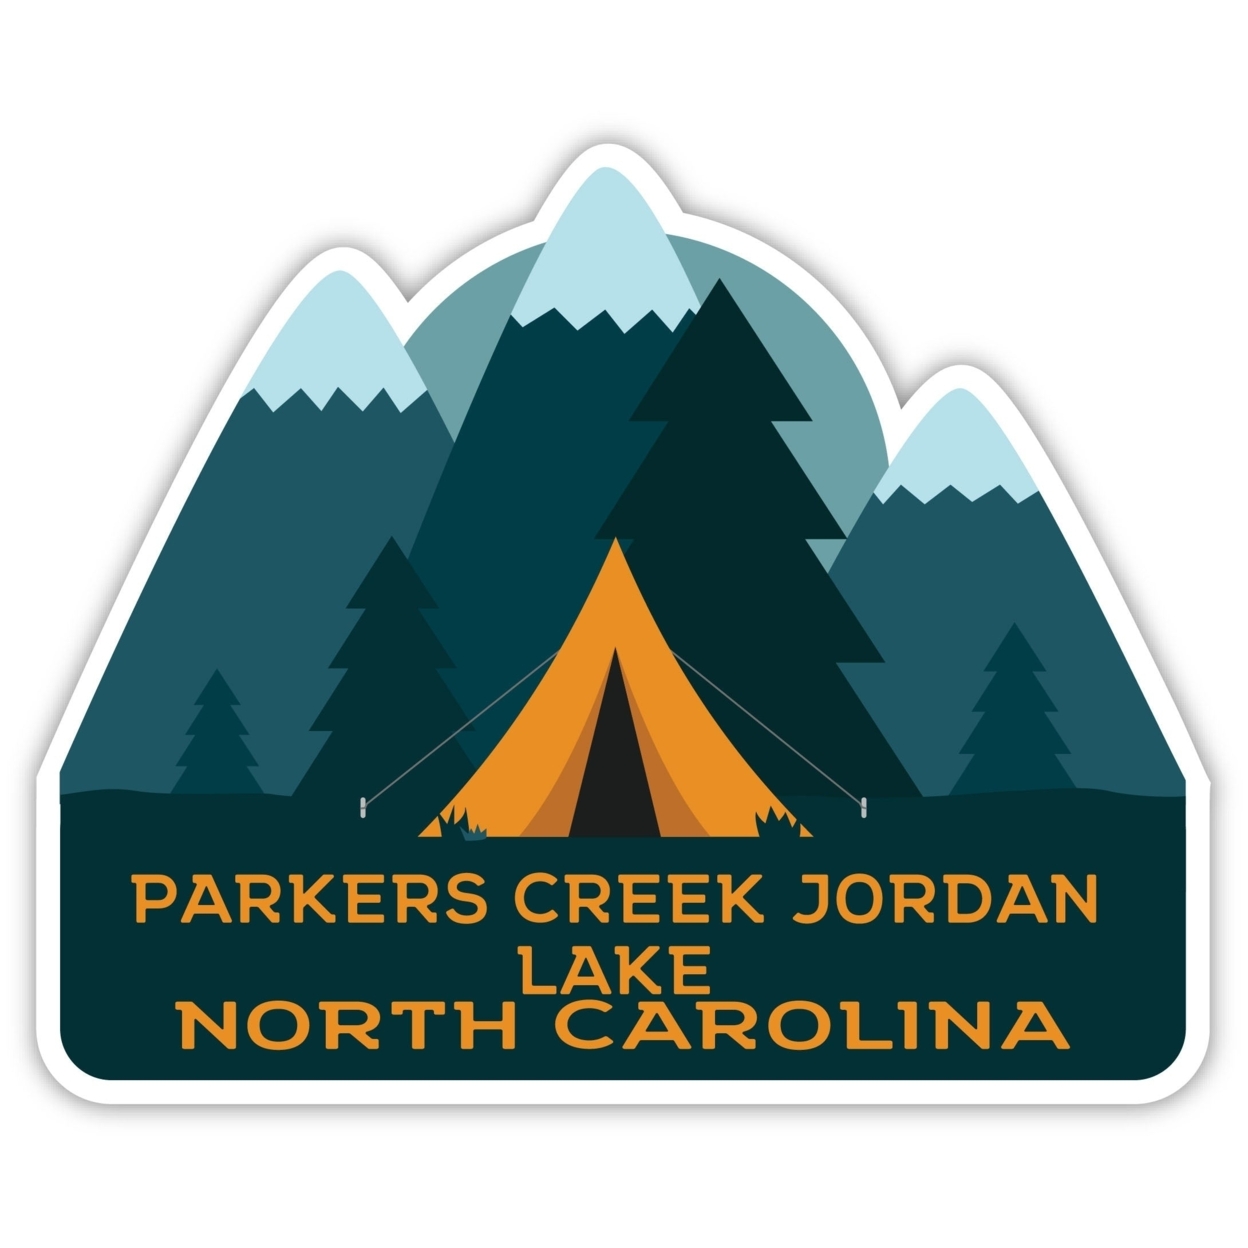 Parkers Creek Jordan Lake North Carolina Souvenir Decorative Stickers (Choose Theme And Size) - Single Unit, 2-Inch, Tent